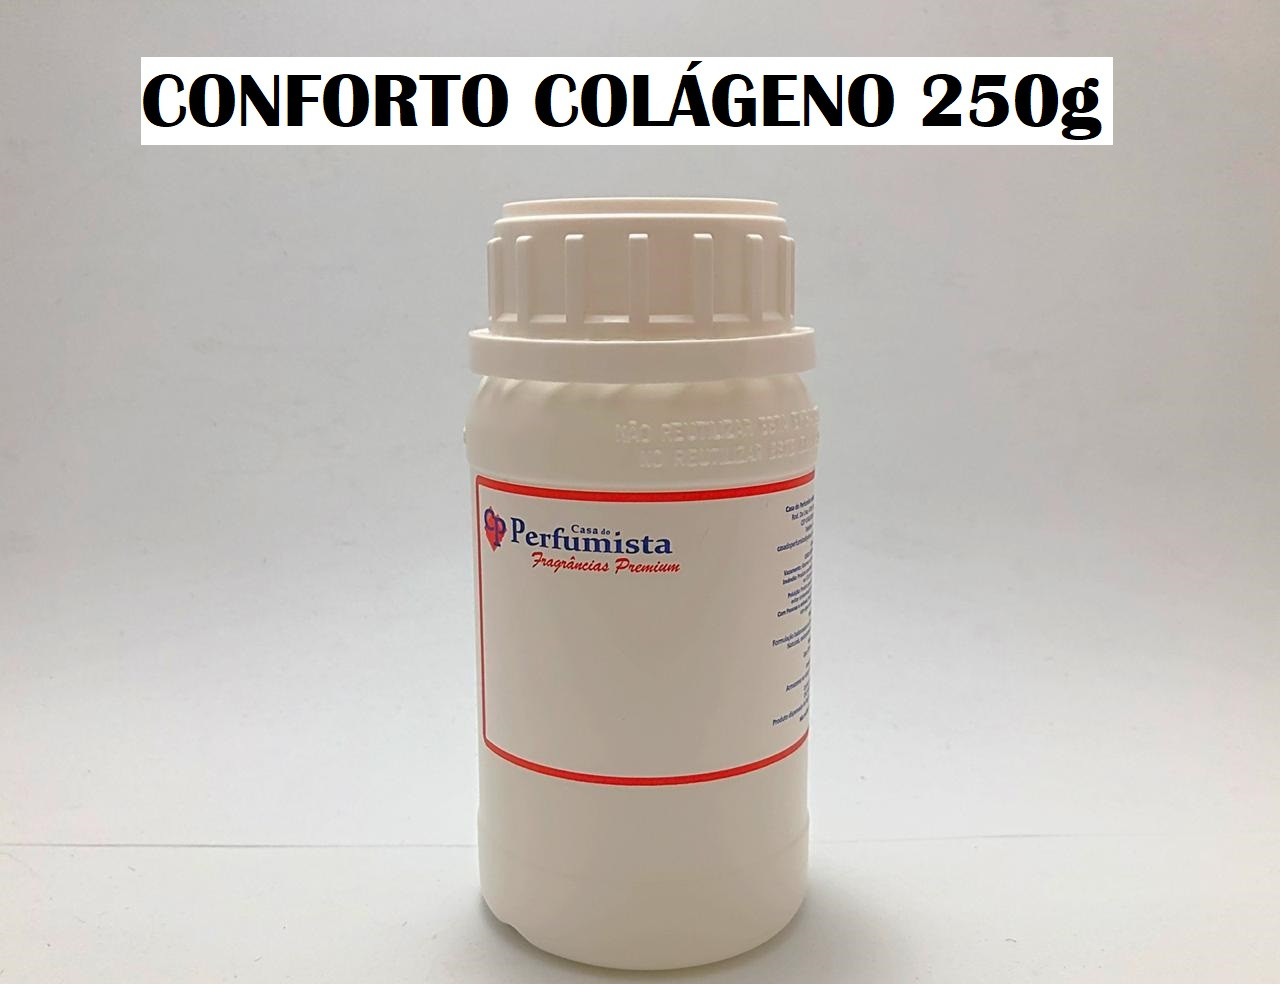 CONFORTO COLÁGENO - 250g